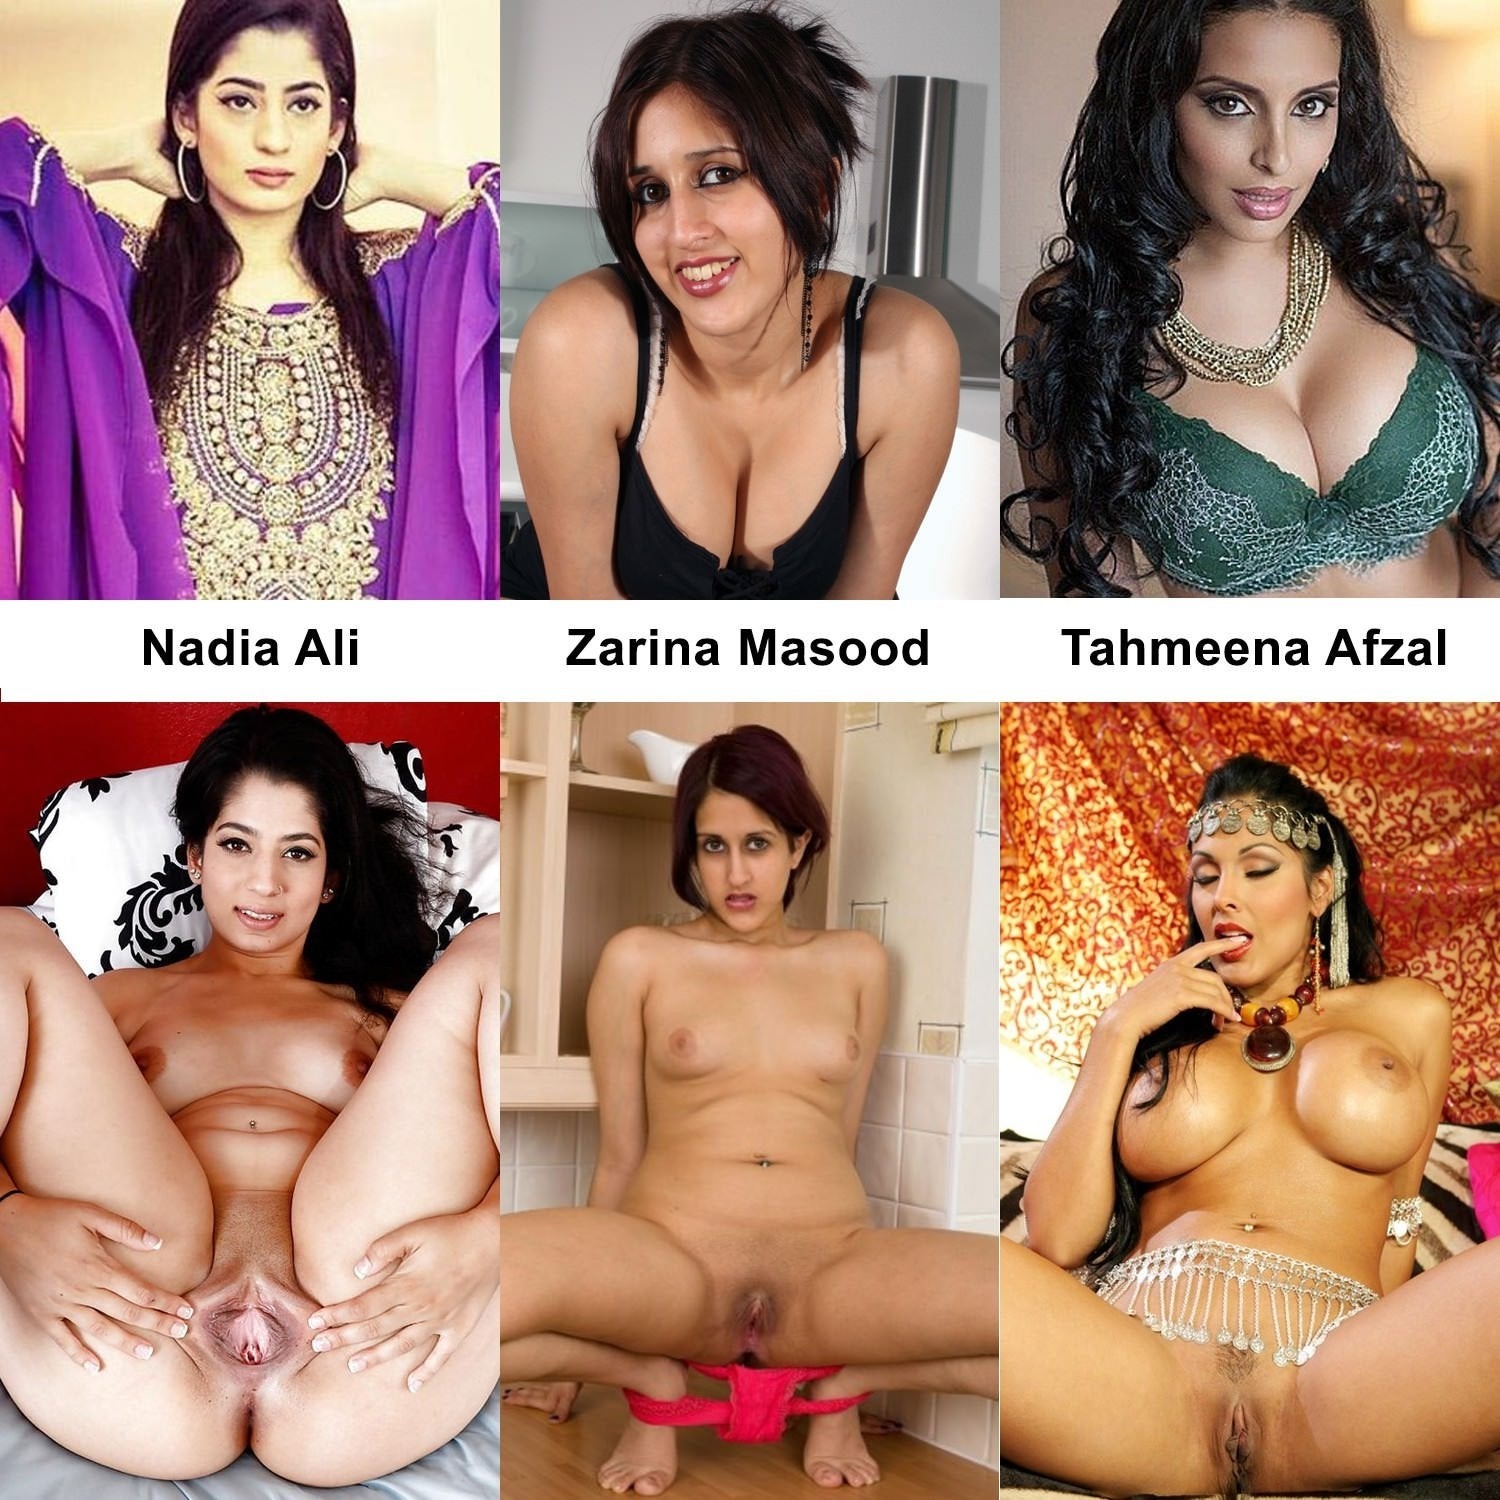 Порно актриса Zarina лучшие порно фото » Порно фото онлайн и секс фото бесплатно